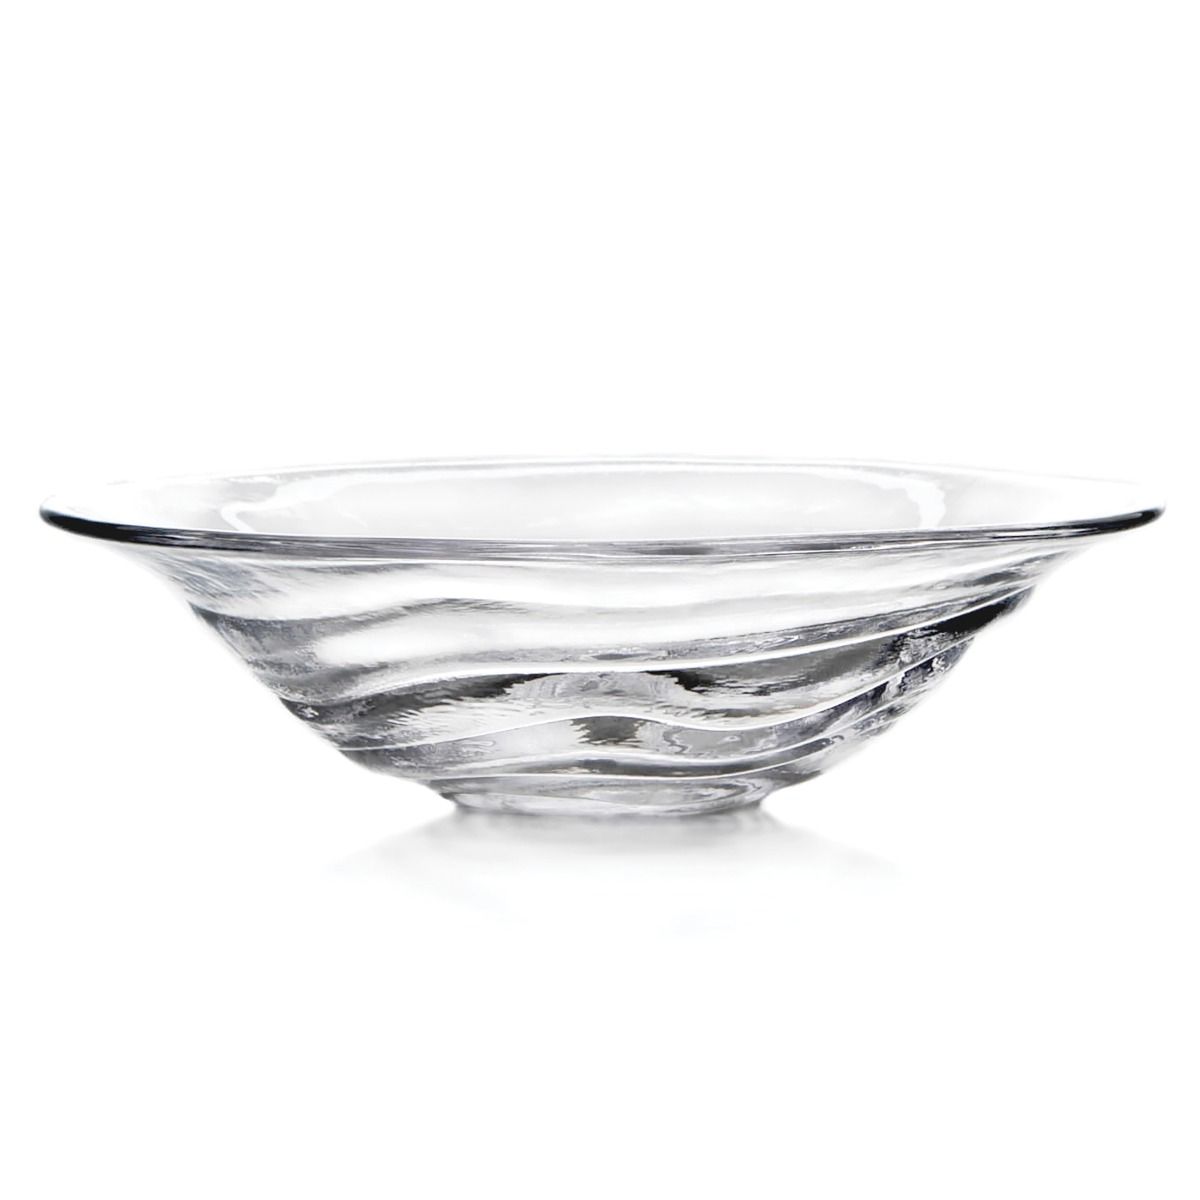 SIMON PEARCE BOWL GLASS THETFORD (Available in 3 Sizes)